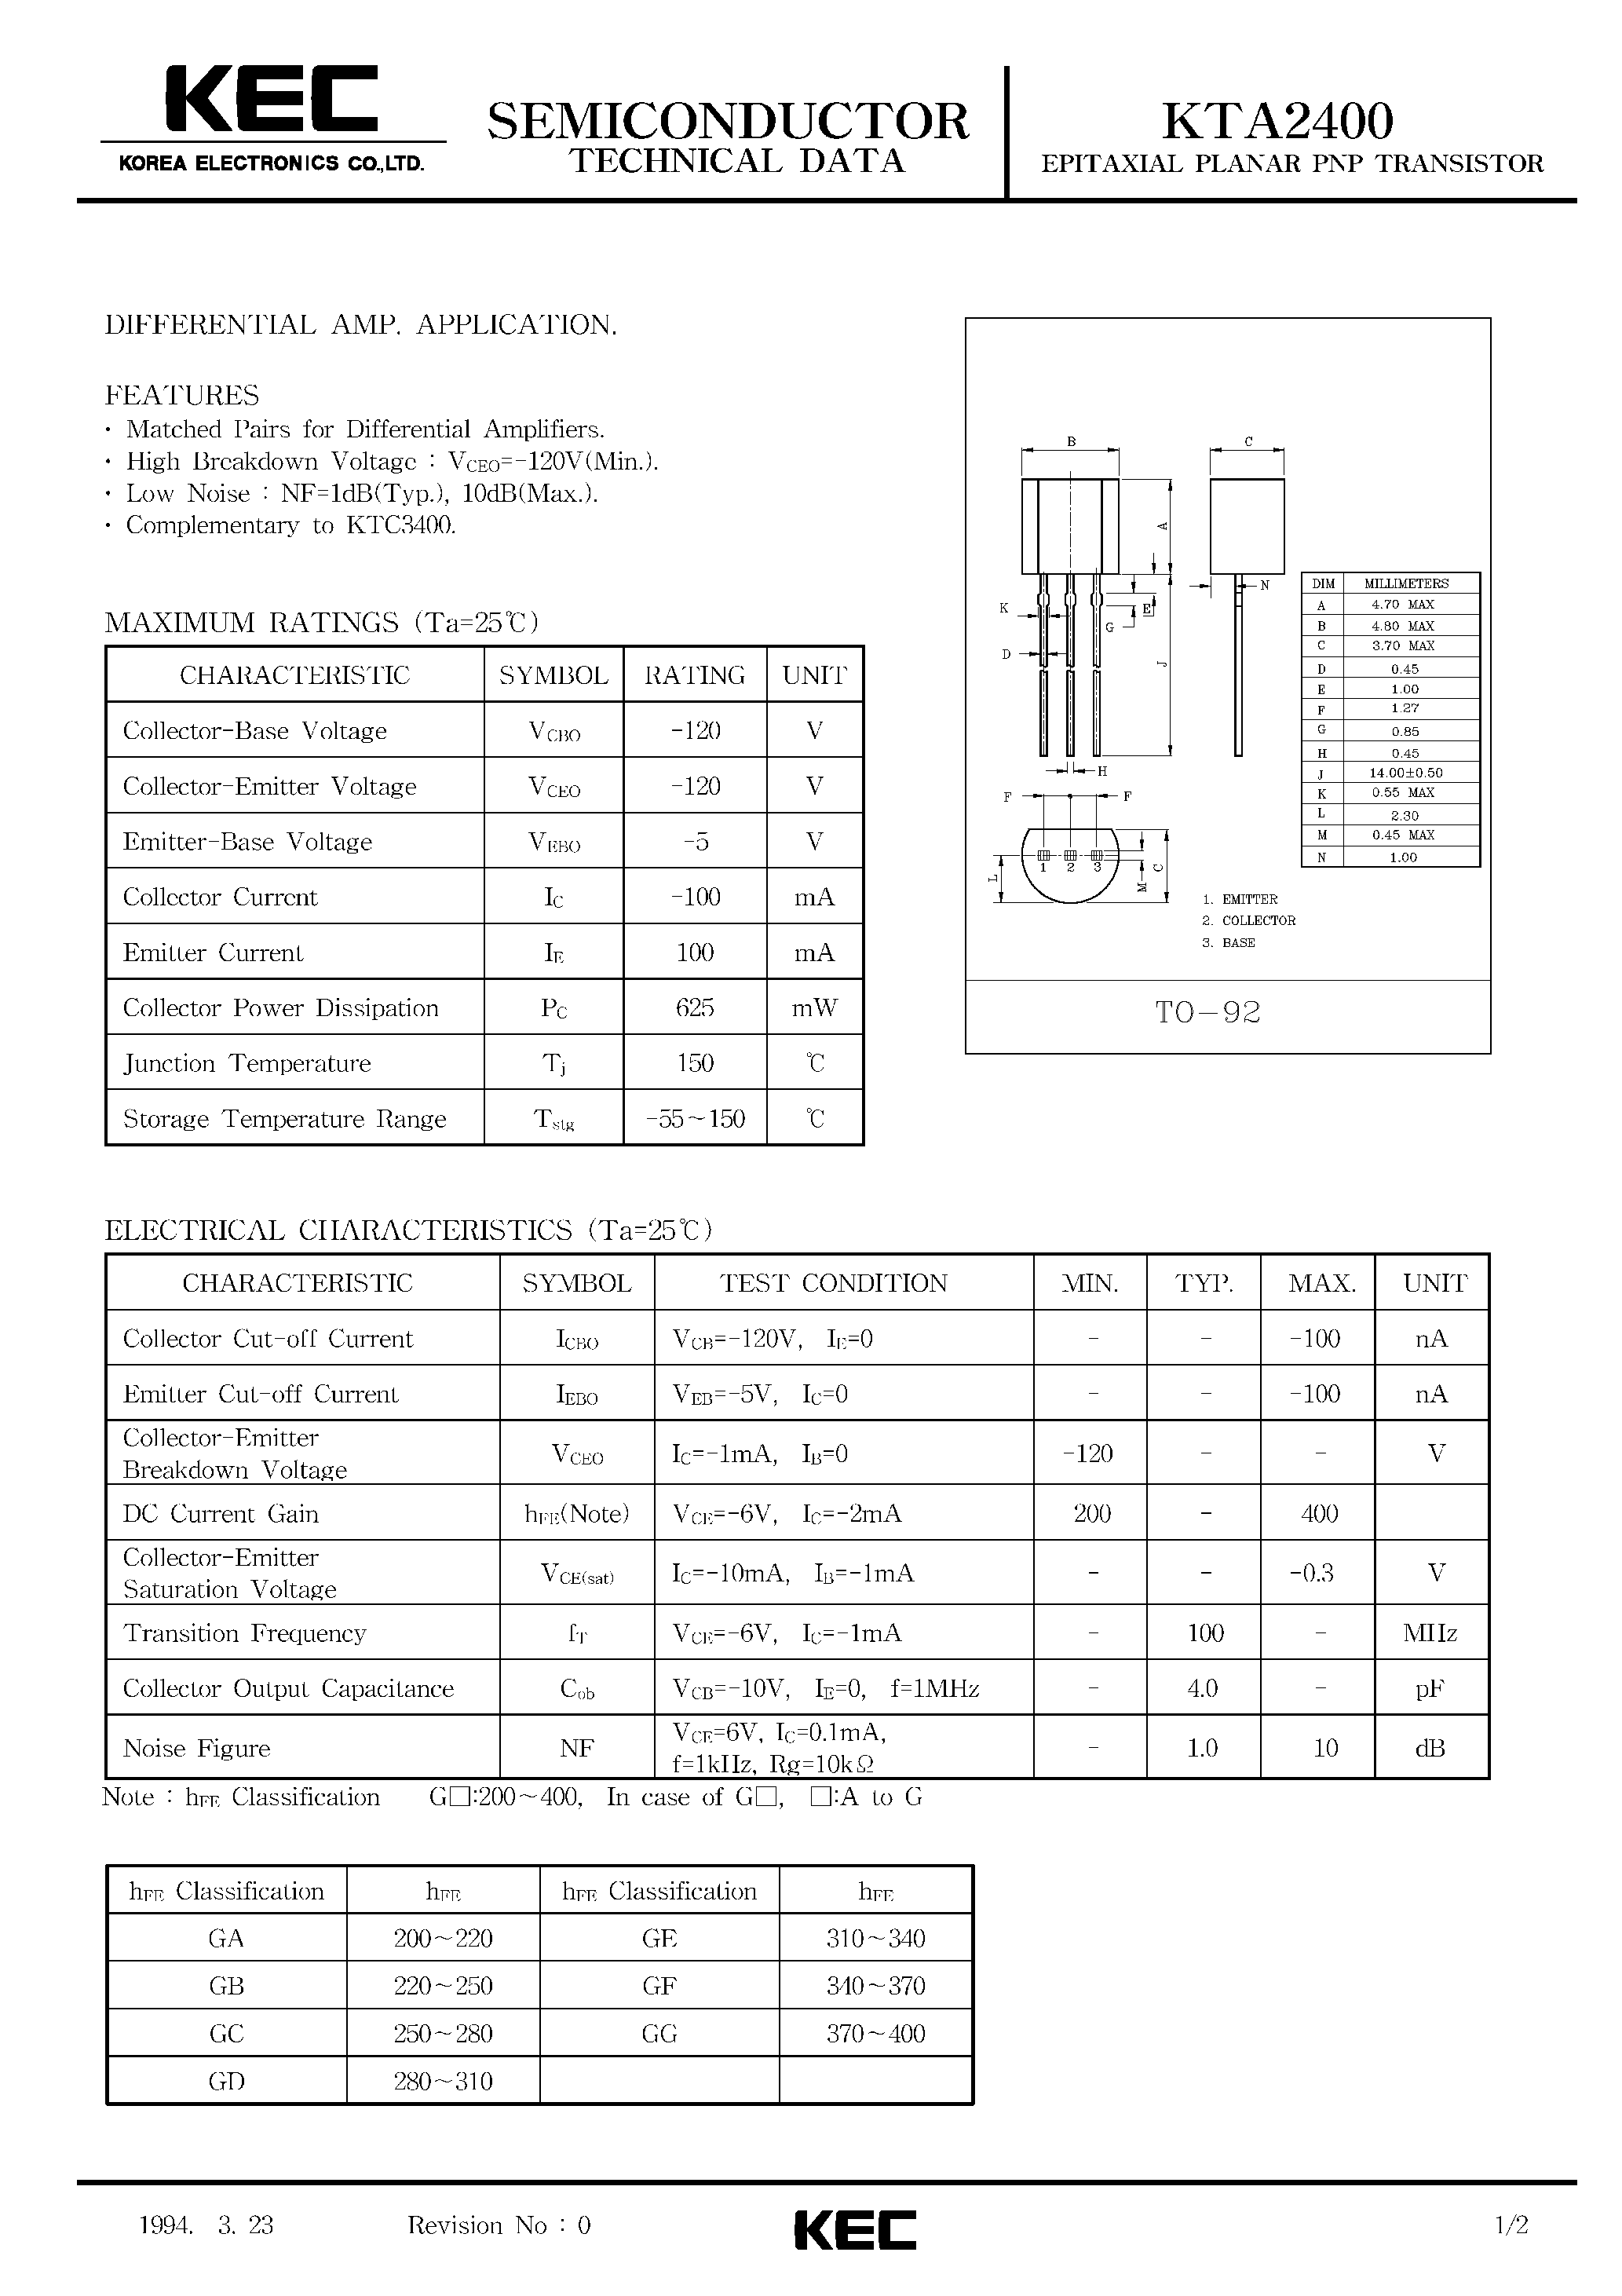 Datasheet KTA2400 - EPITAXIAL PLANAR PNP TRANSISTOR (DIFFERENTIAL AMP.) page 1